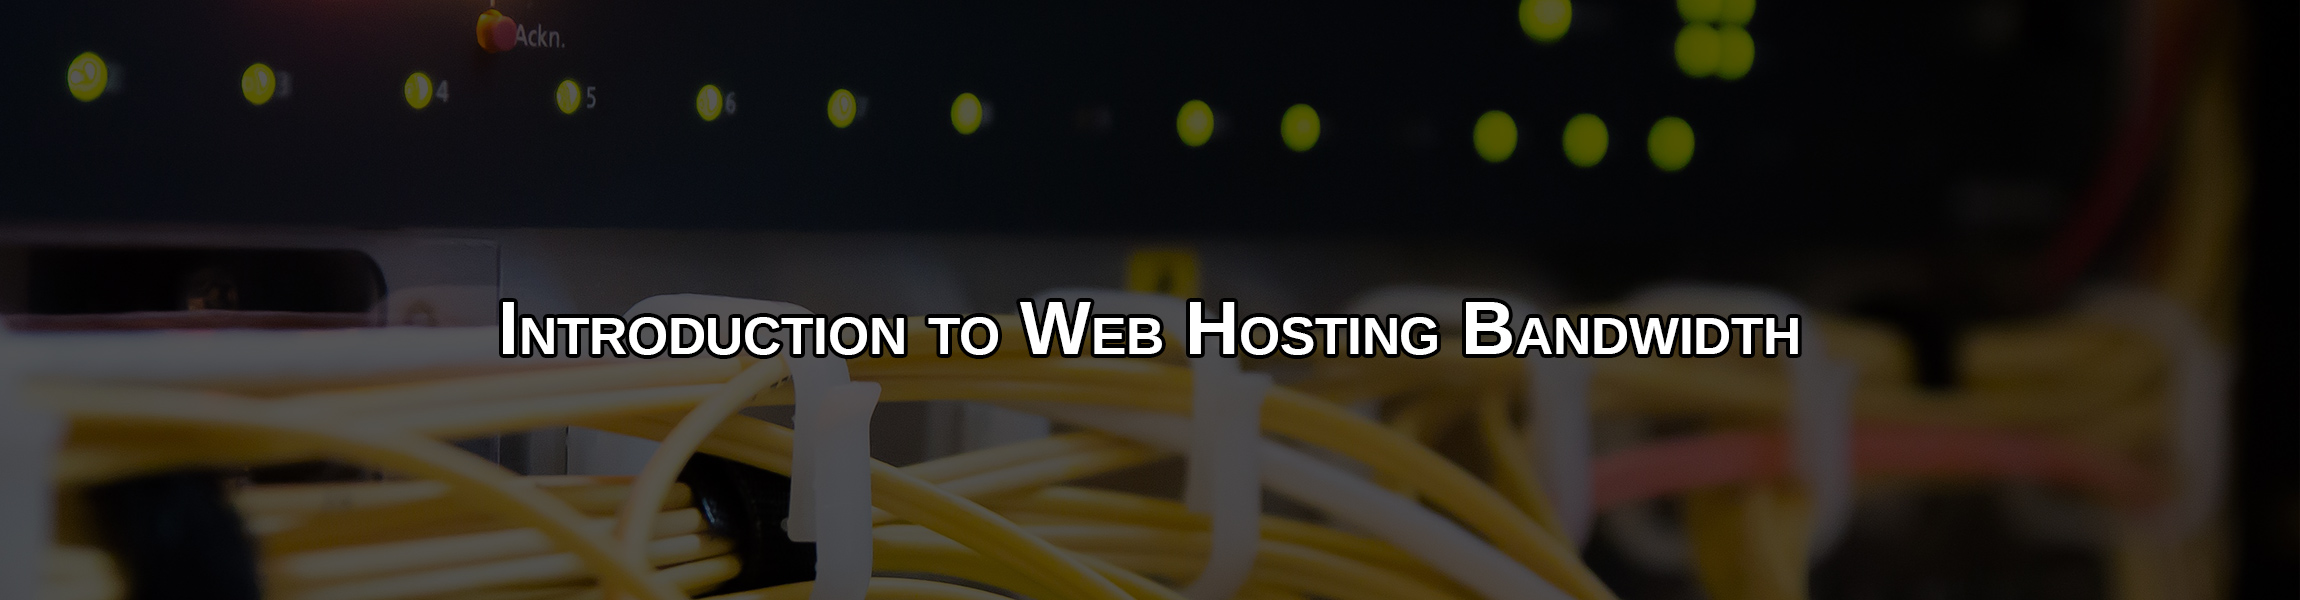 Introduction to Web Hosting Bandwidth